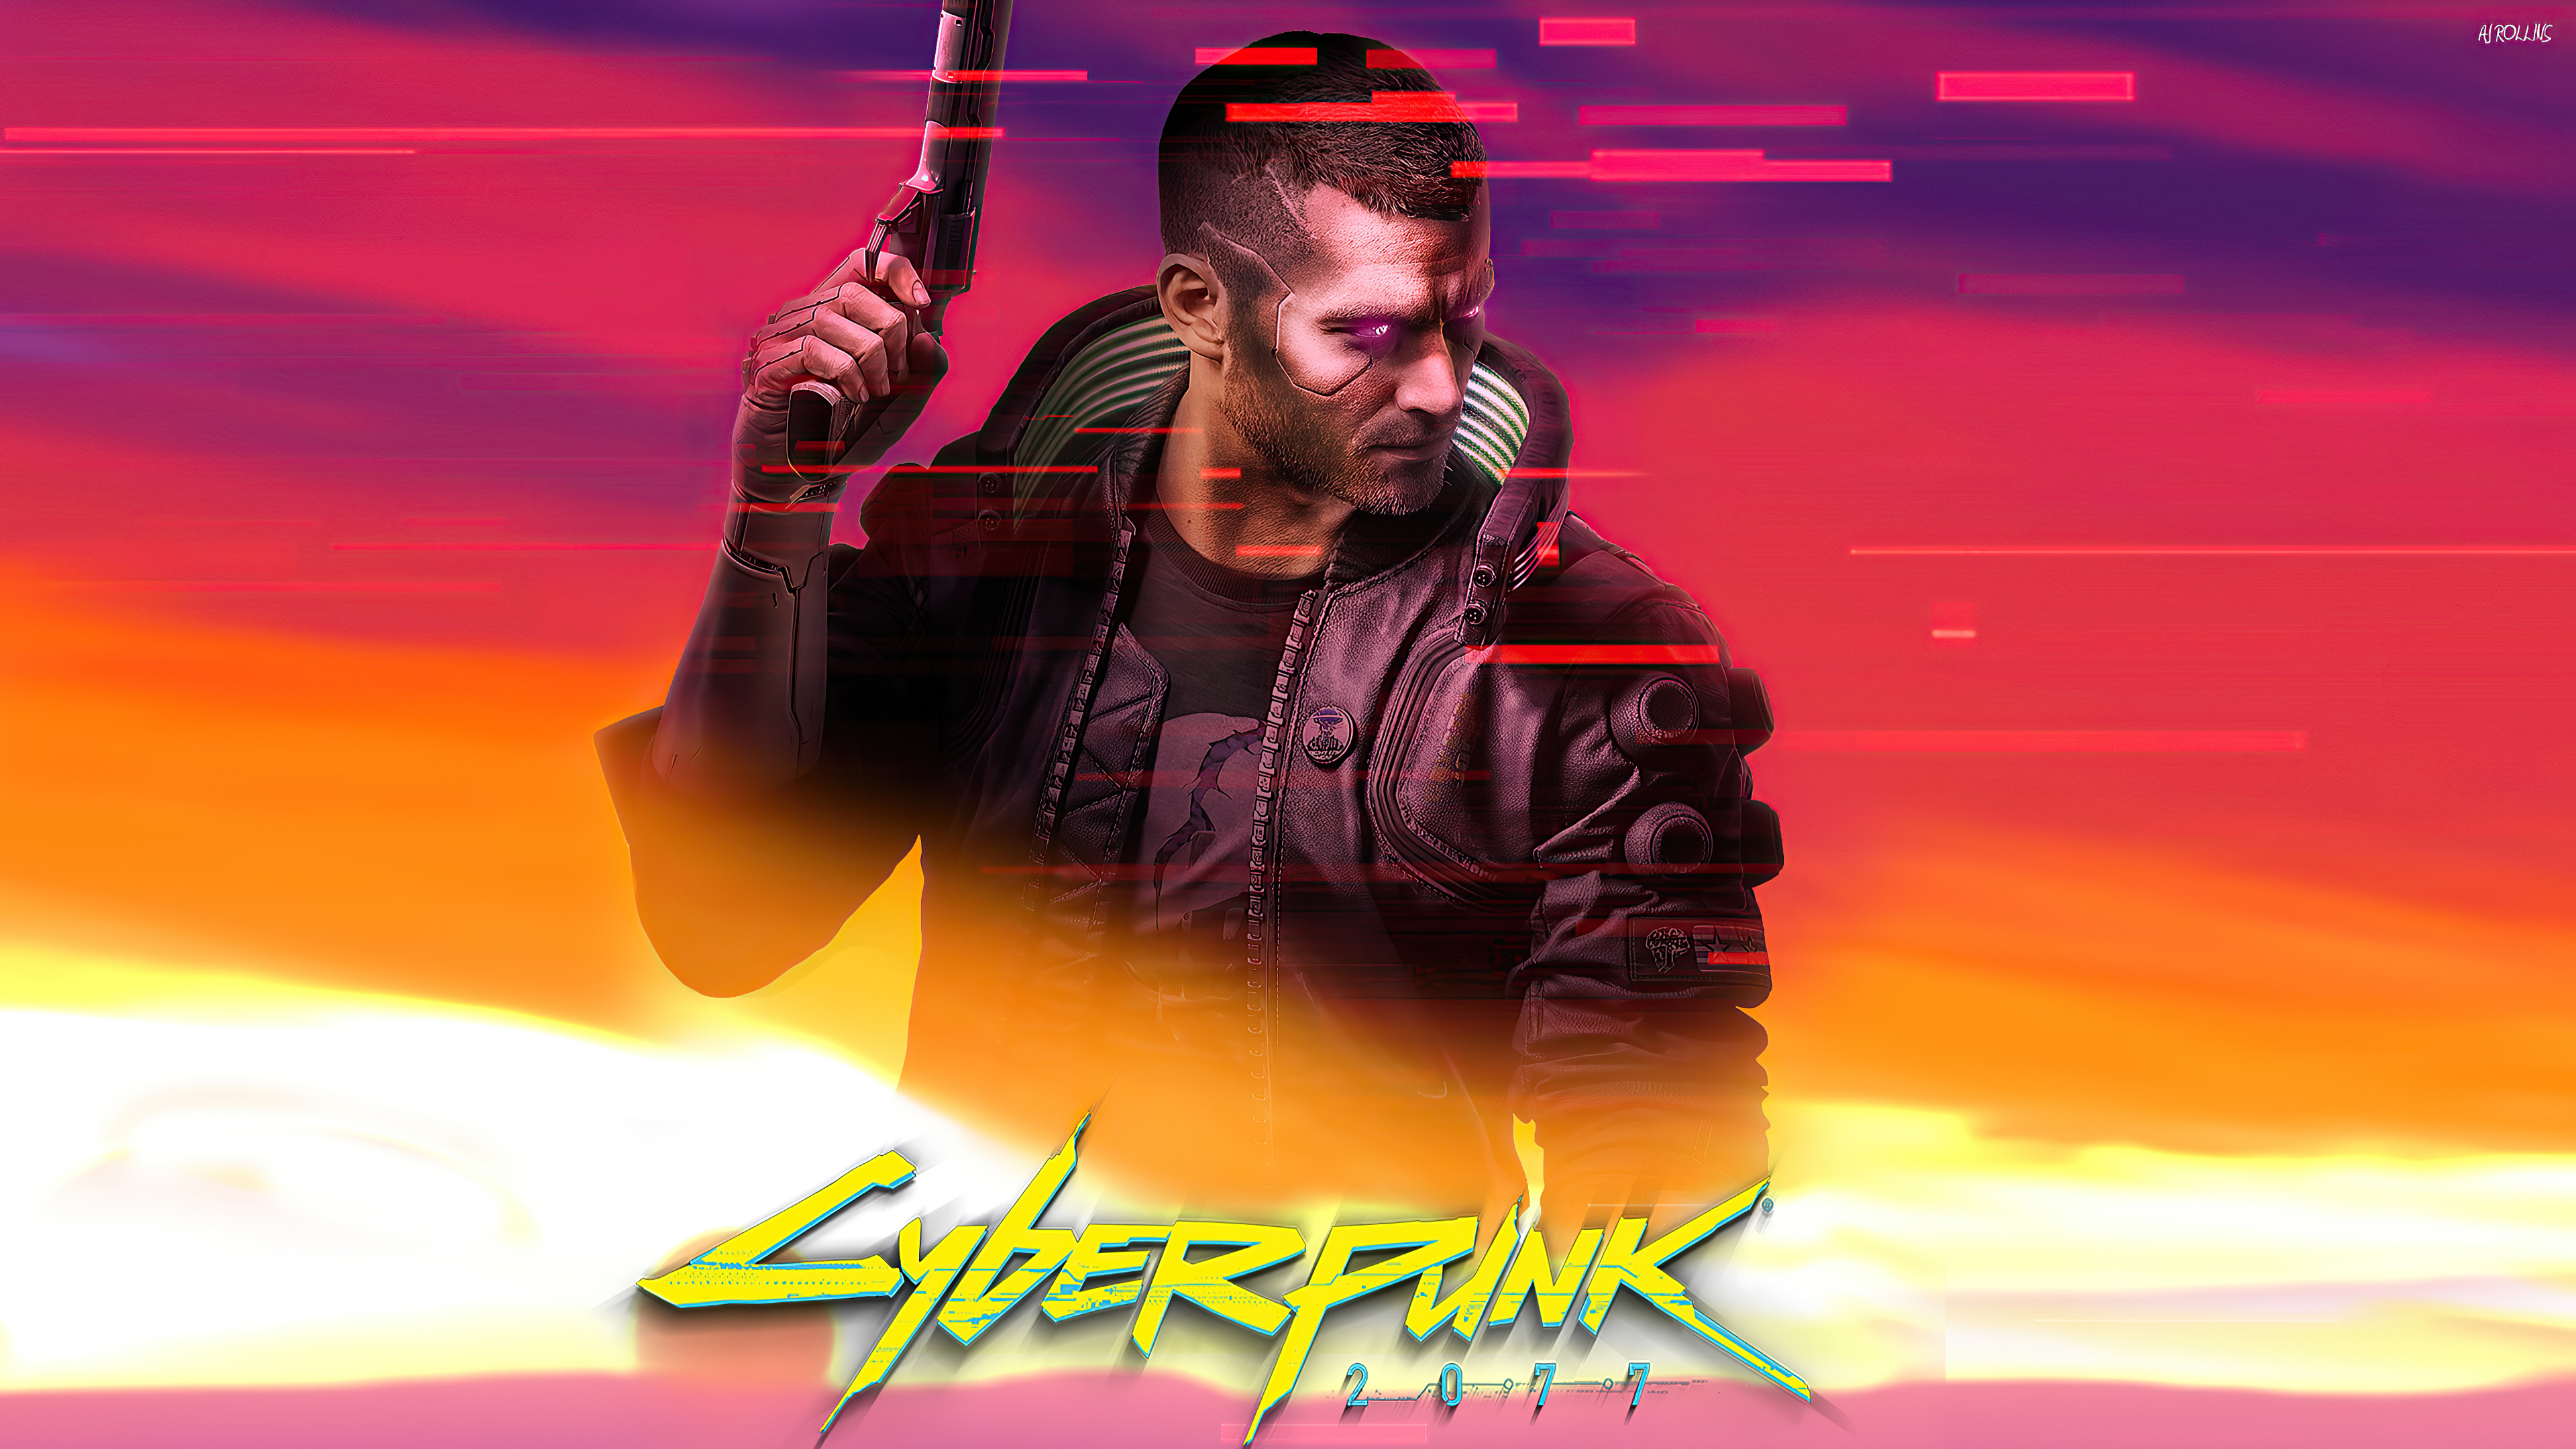 Cyberpunk 2077 Ciri Fan Art 4k Wallpaper,HD Games Wallpapers,4k